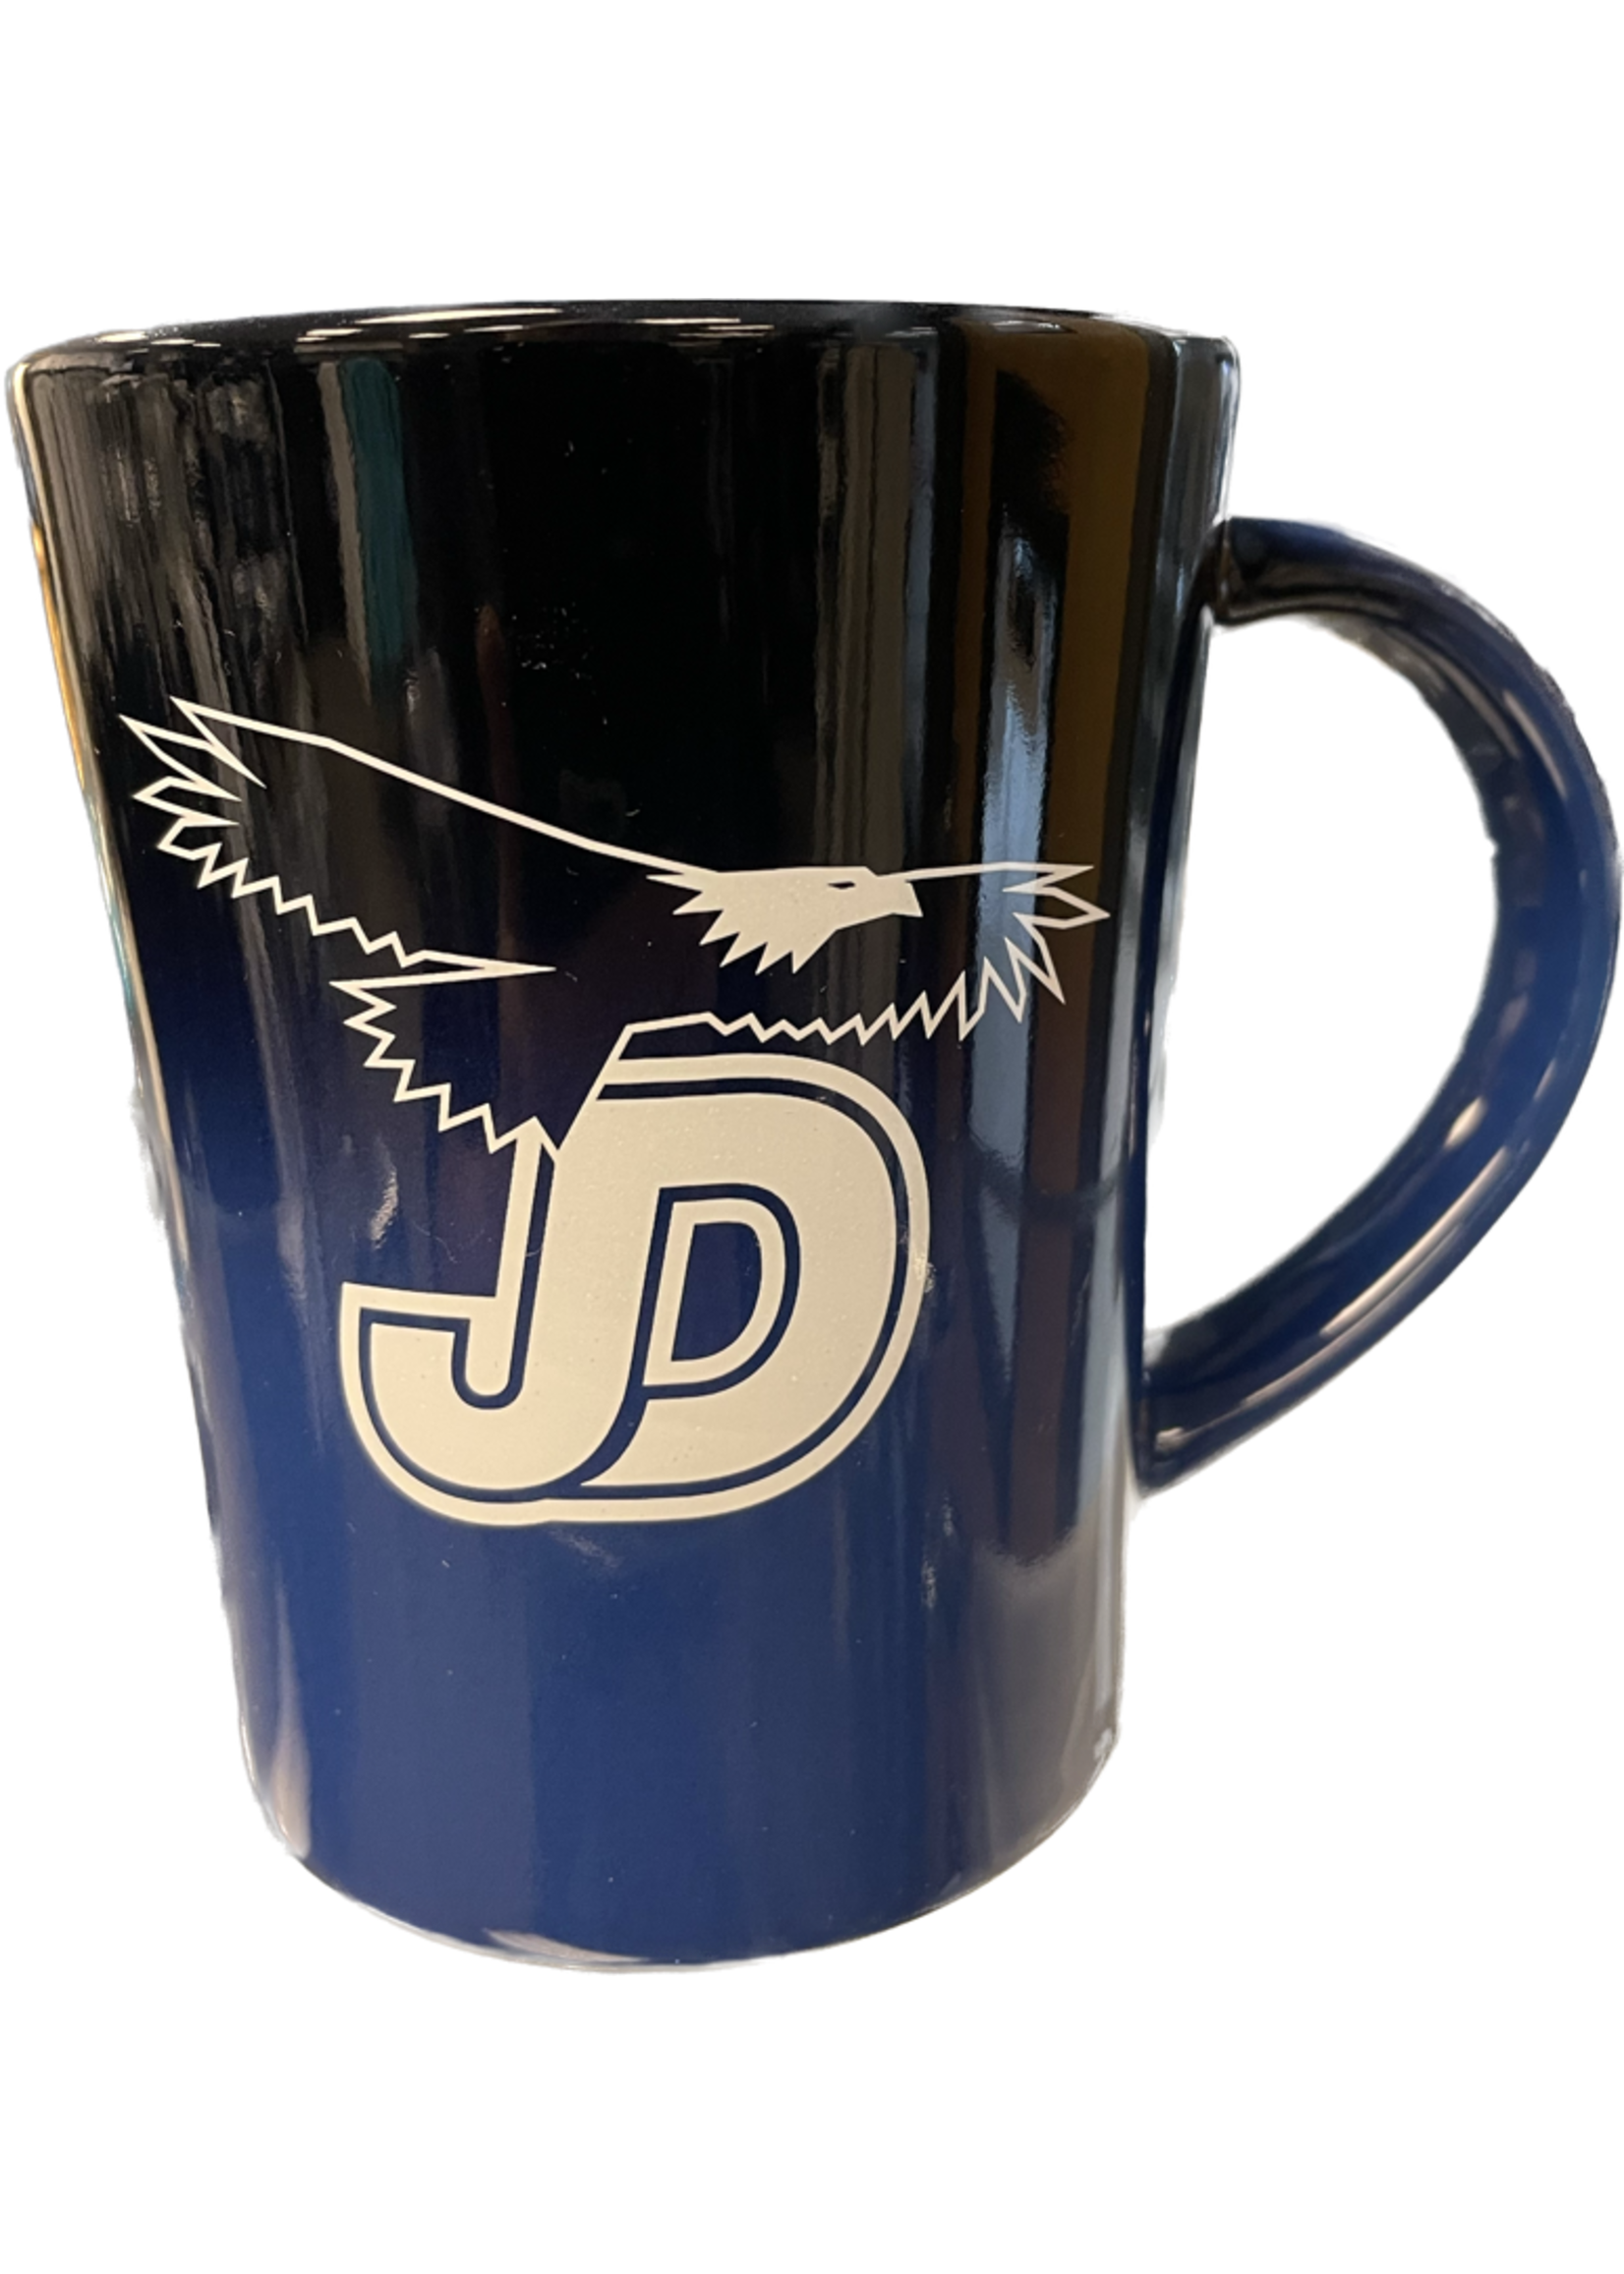 NON-UNIFORM Beverage JD Mug, navy - Fundraiser